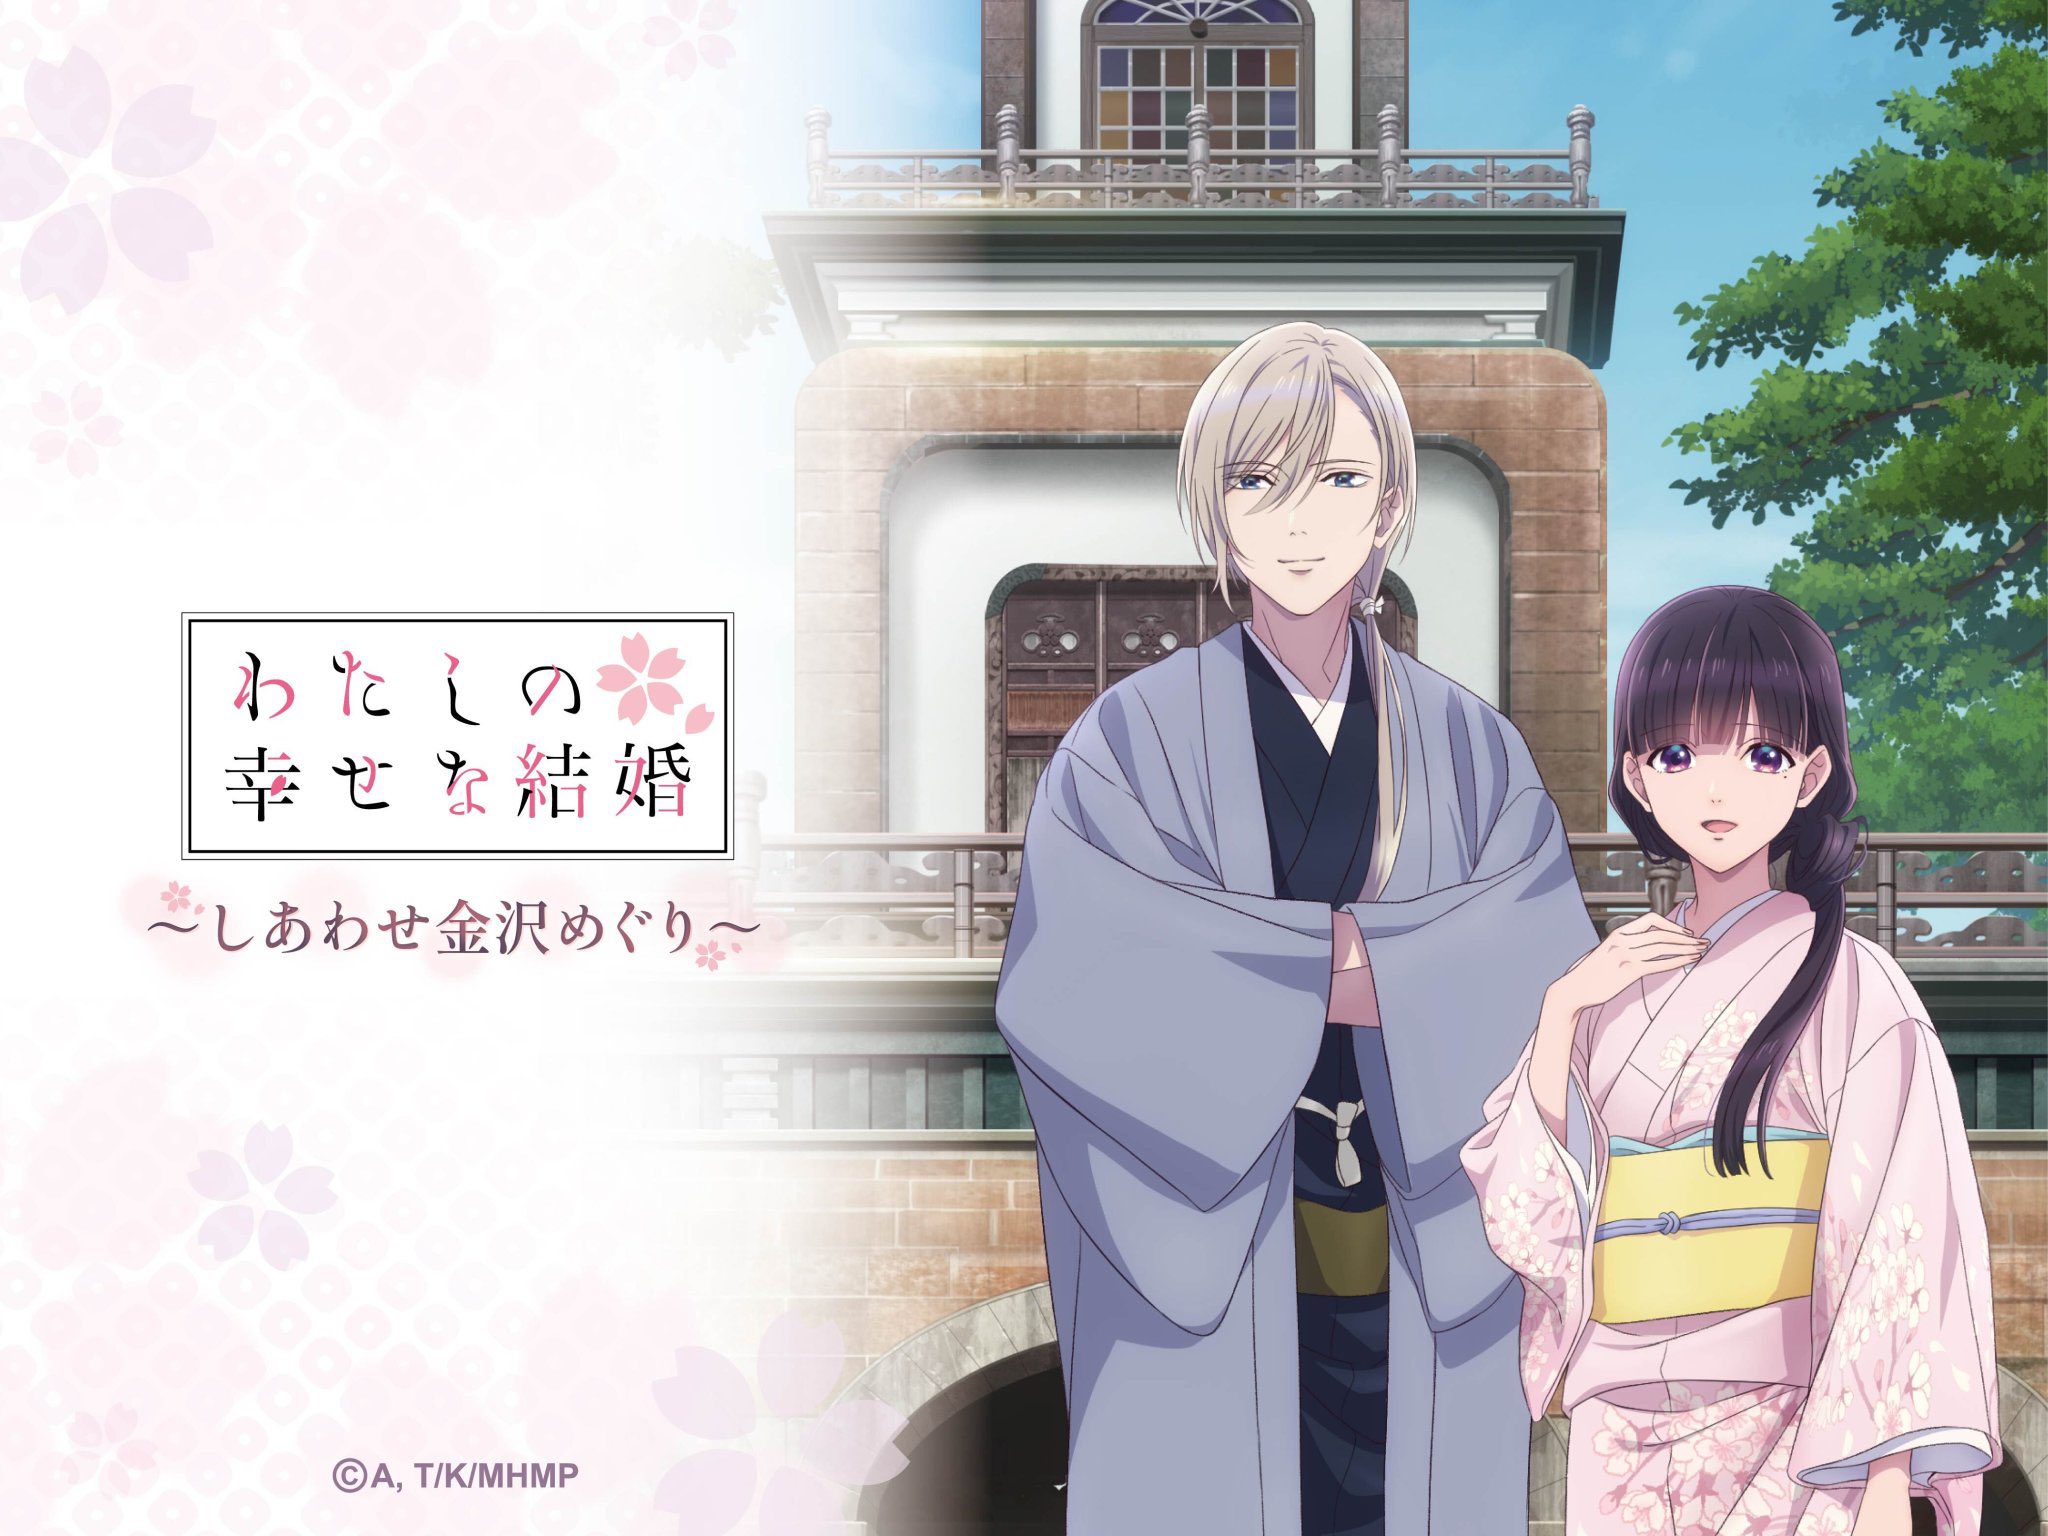 Watashi no Shiawase na Kekkon (My Happy Marriage) Anime Image Board